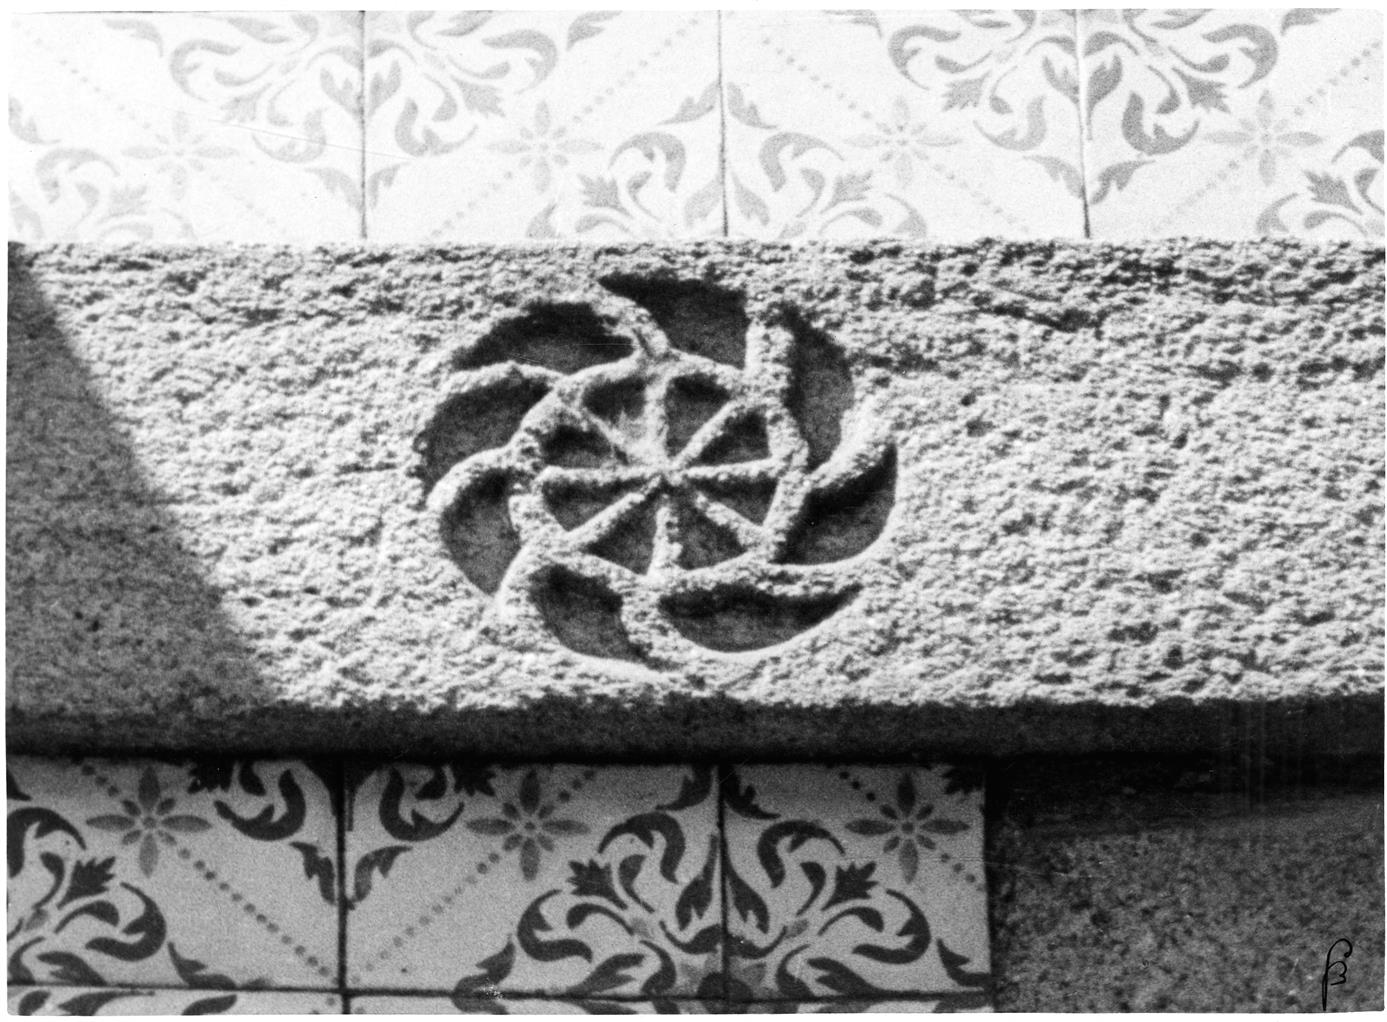 Aspectos arqueológicos e artísticos da cidade do Porto : roda de Santa Catarina, na casa n.º 79 da rua das Flores